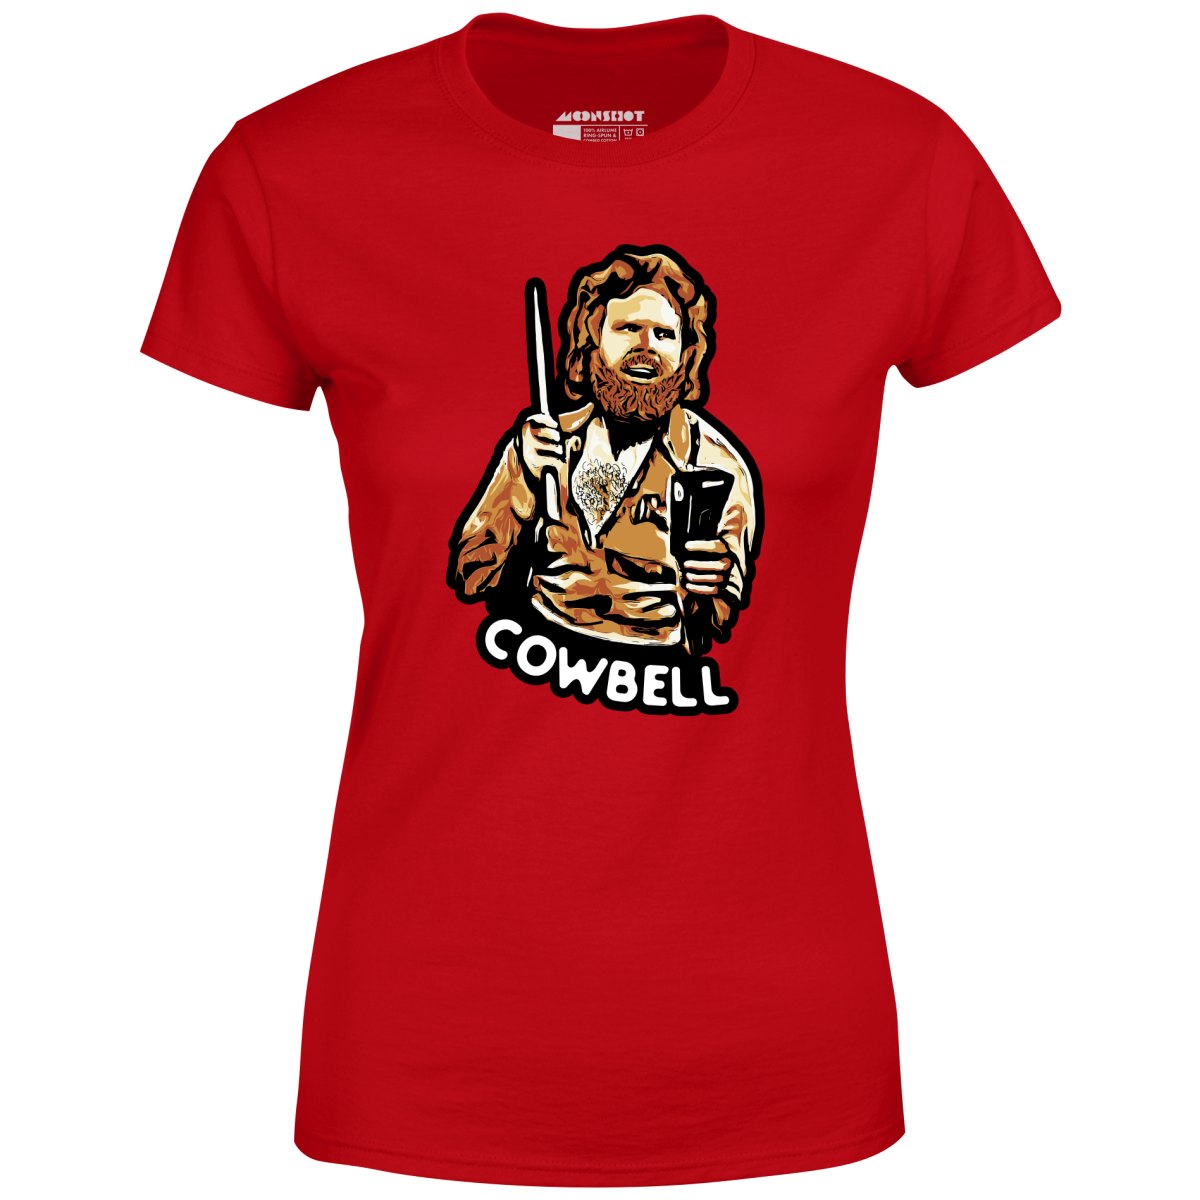 More Cowbell - Women's T-Shirt